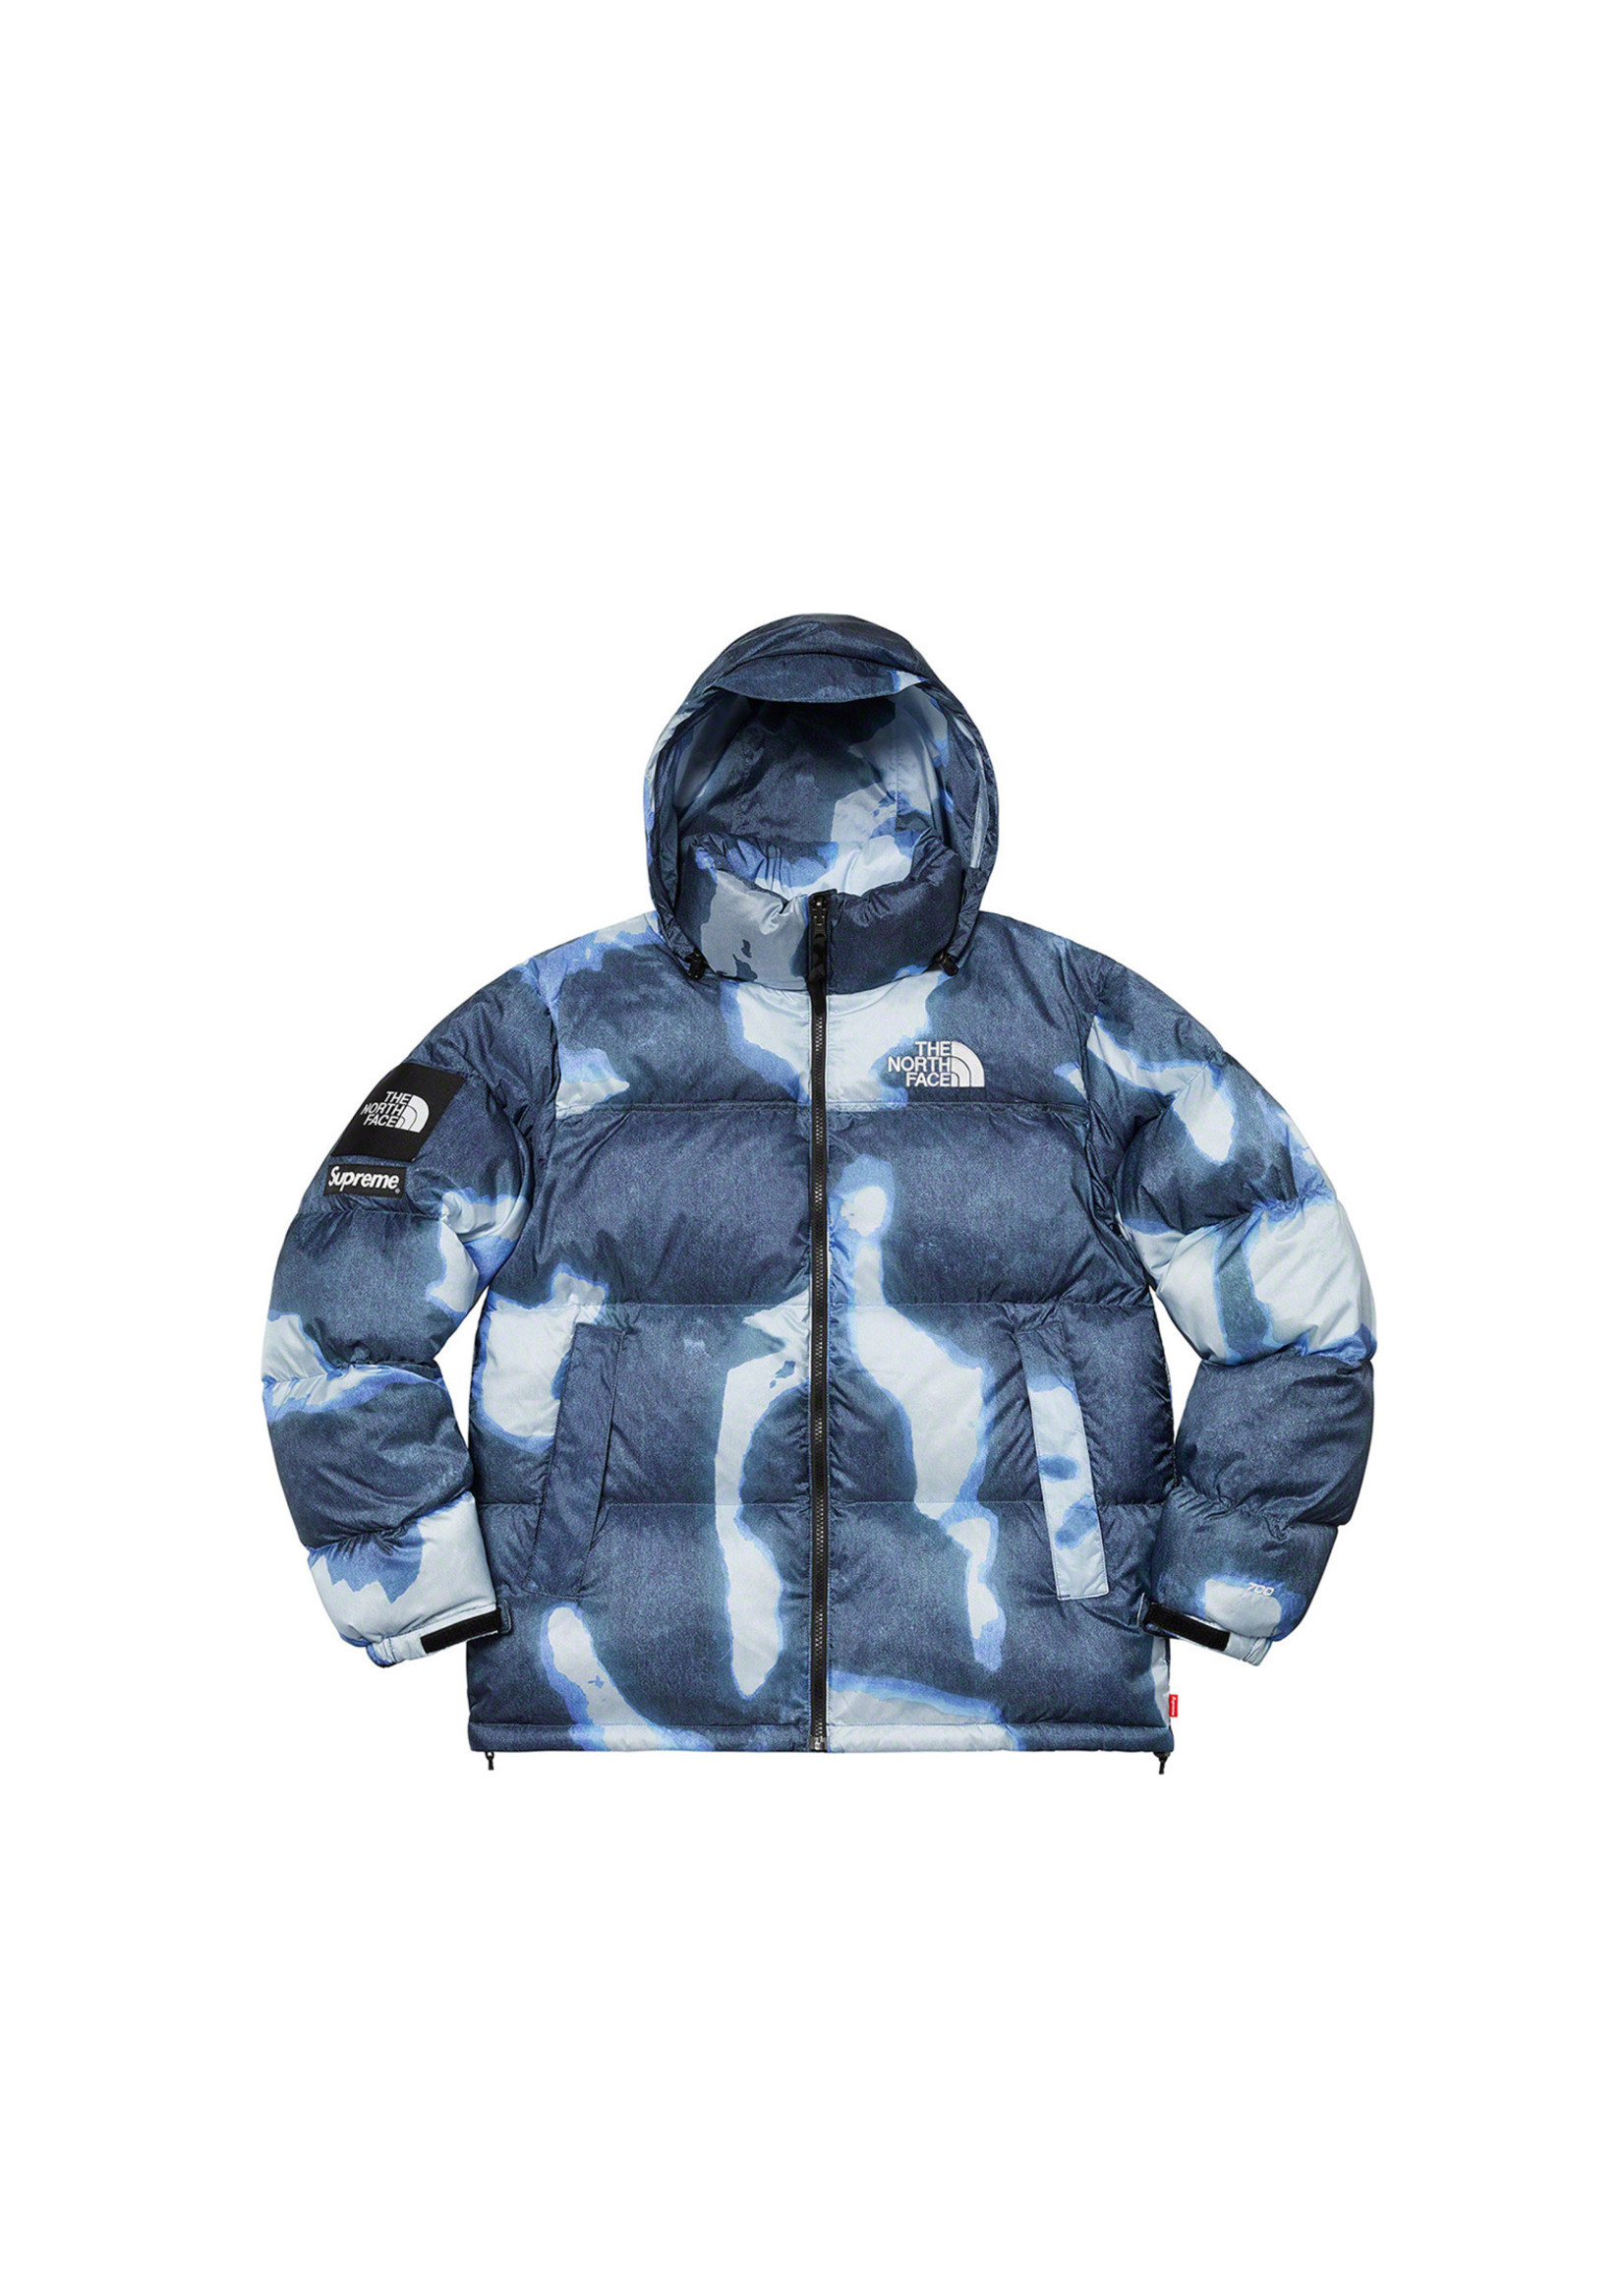 Supreme Supreme x The North Face "Bleach Denim Blue" Puffer Jacket (L)